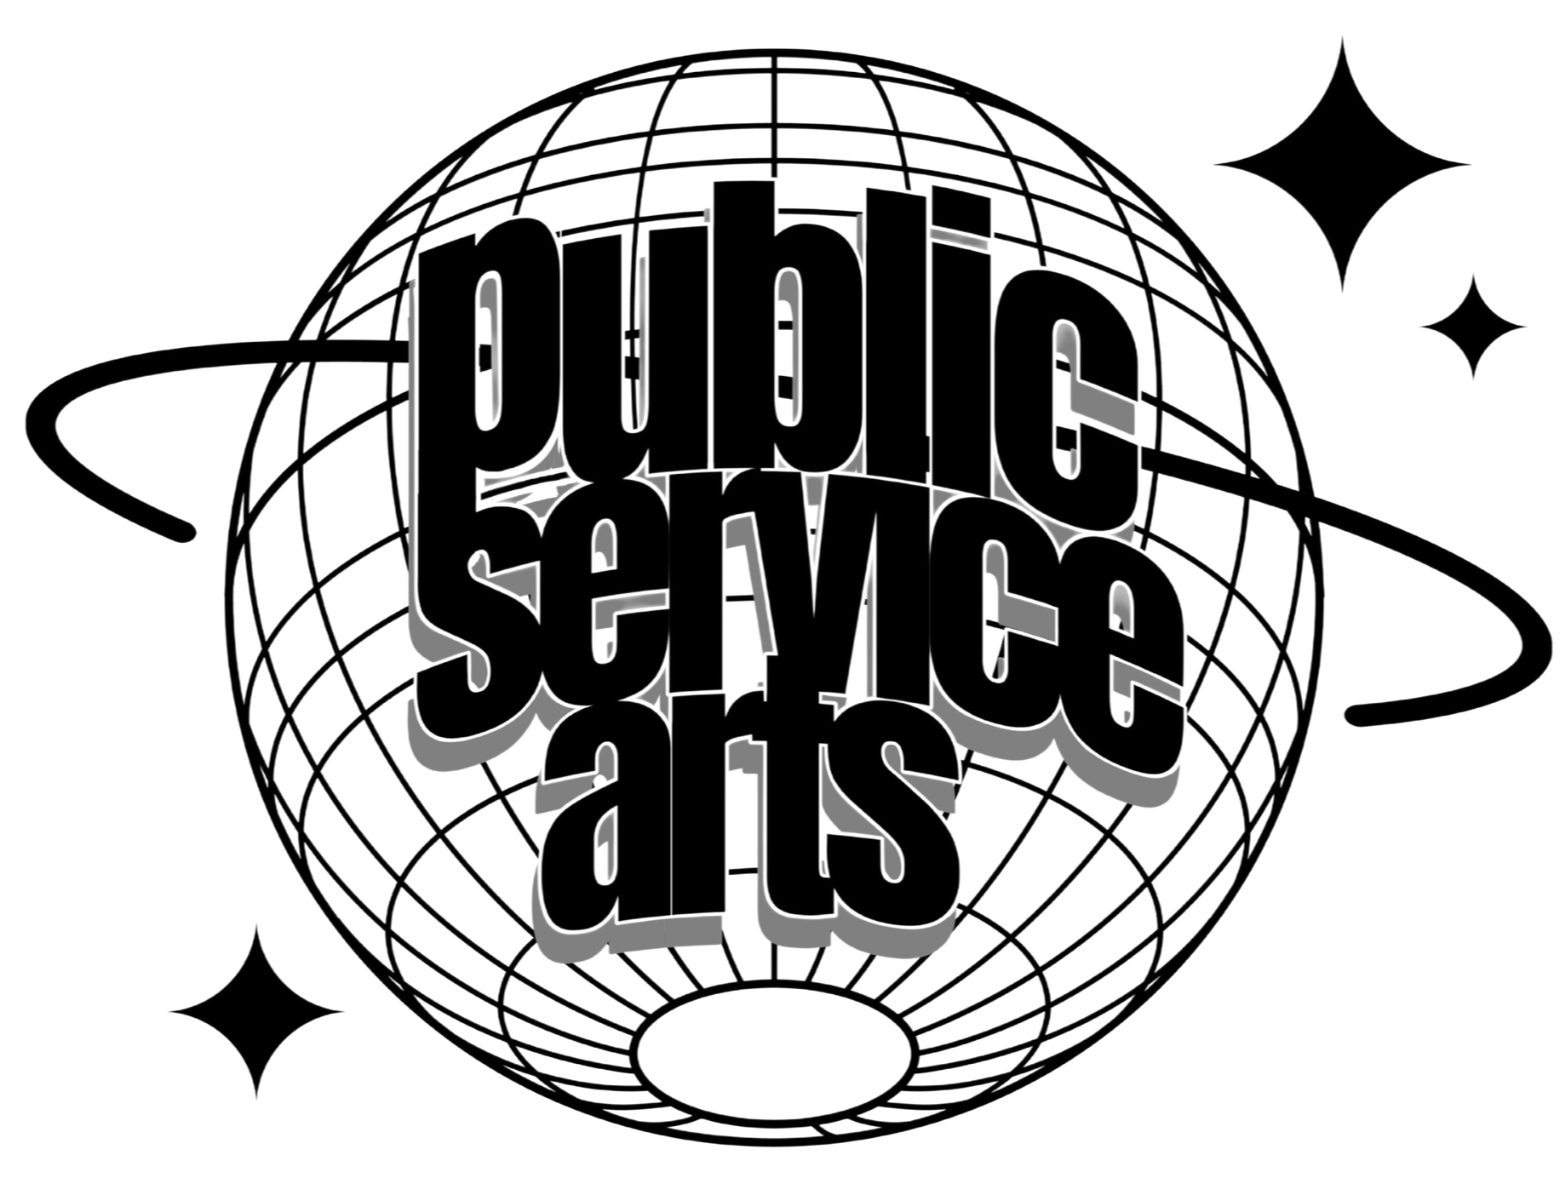 Public Service Arts logo